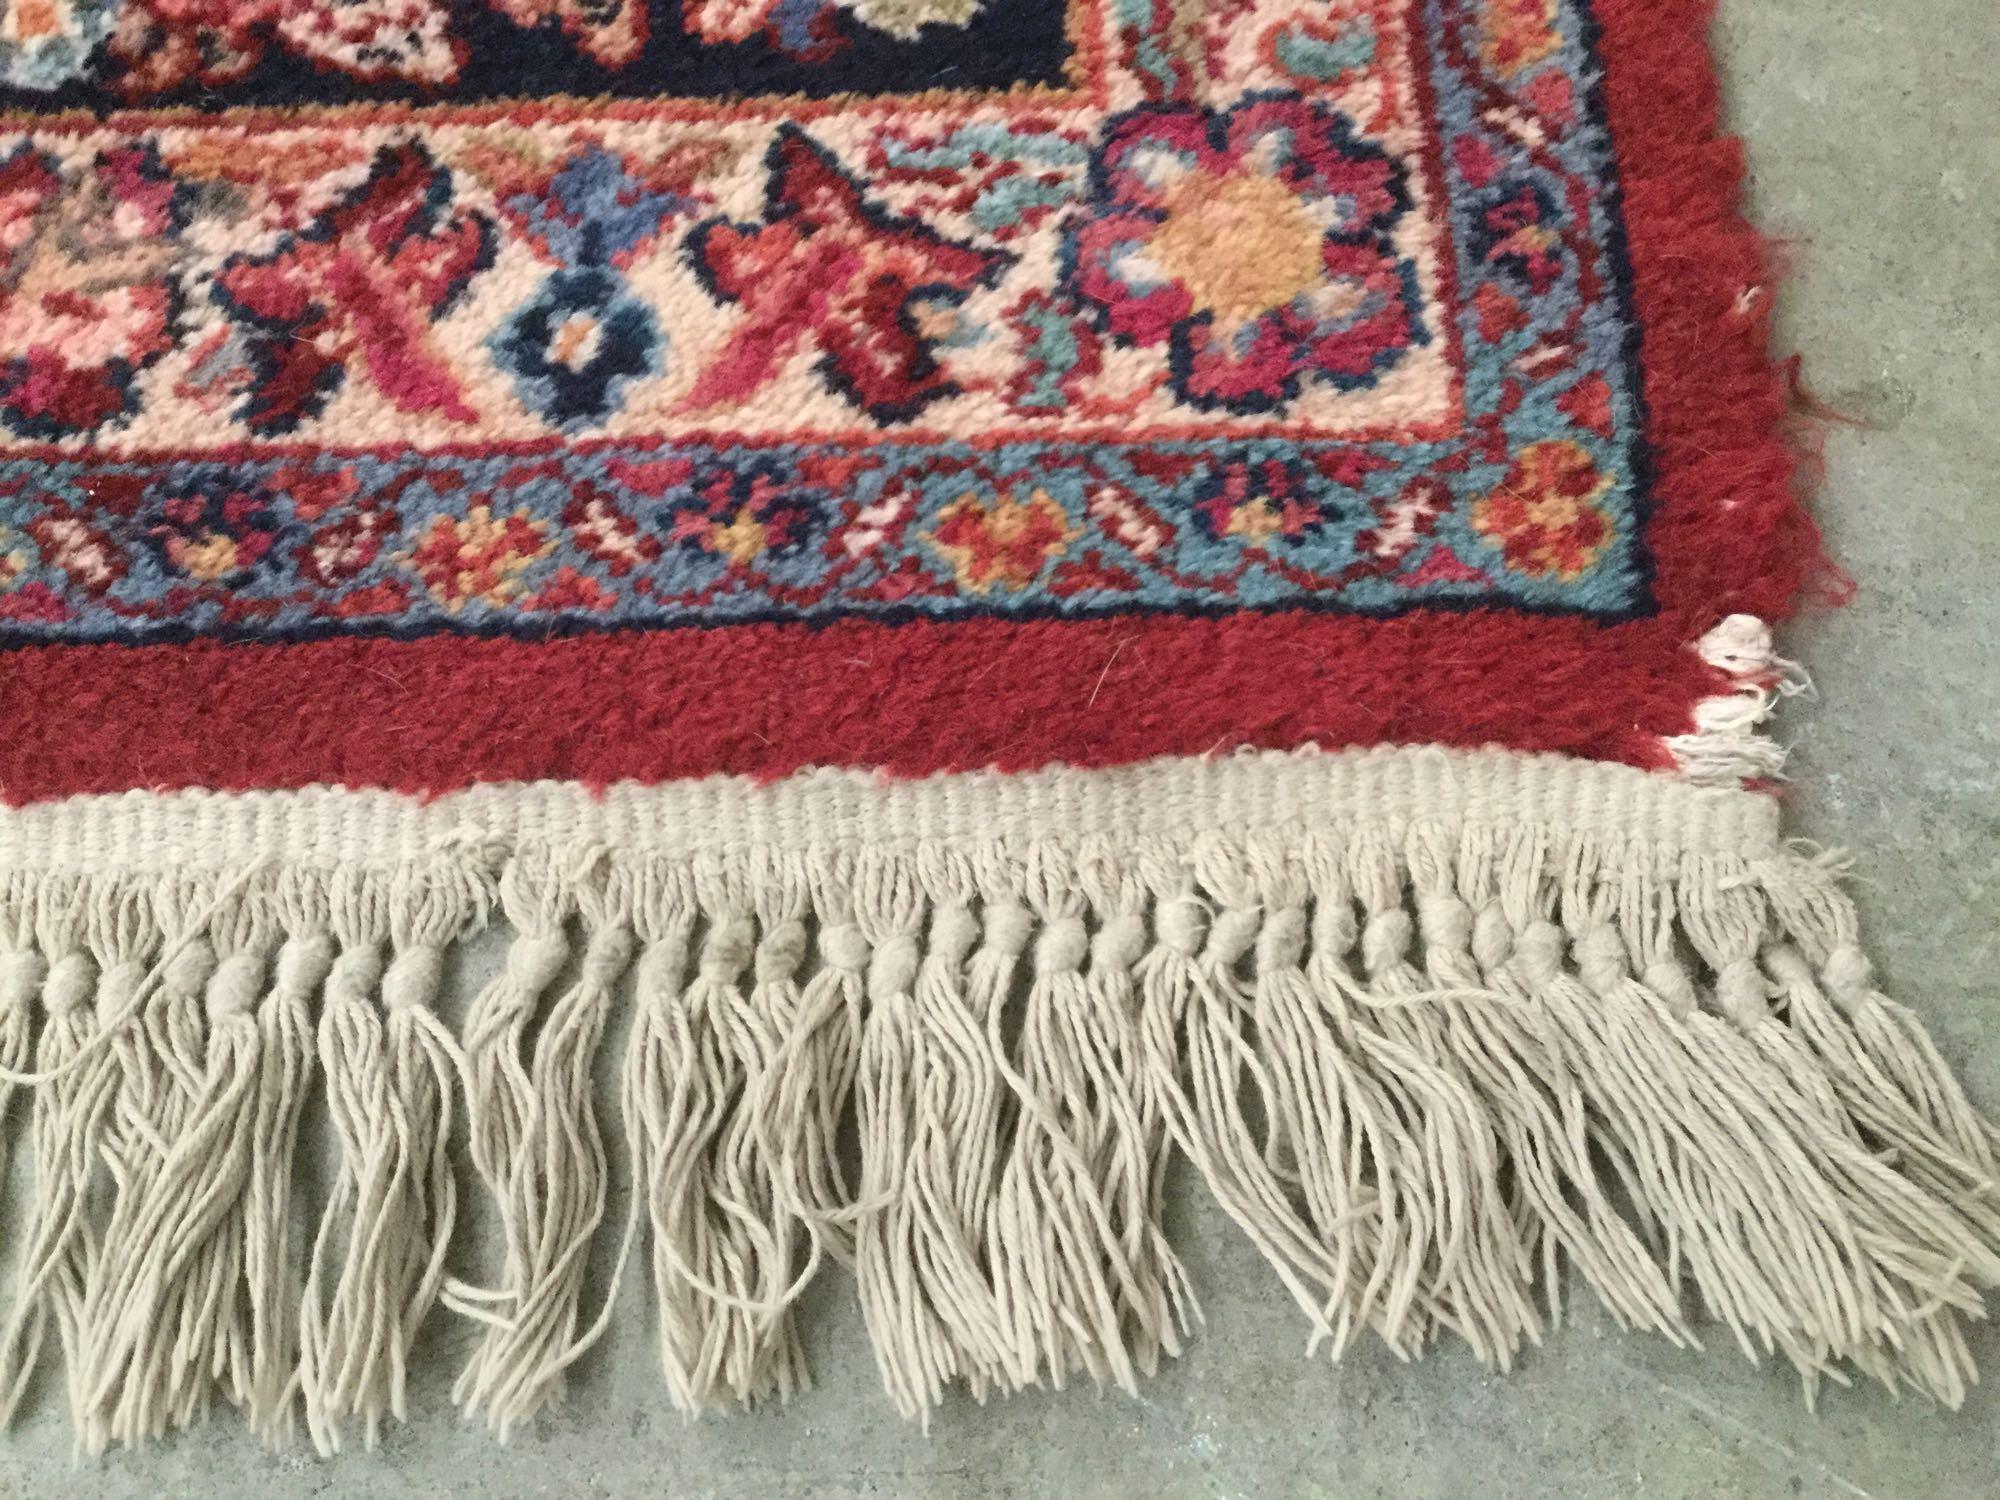 Karastan red sarouk #785 wool area rug - modeled after antique Persian rugs